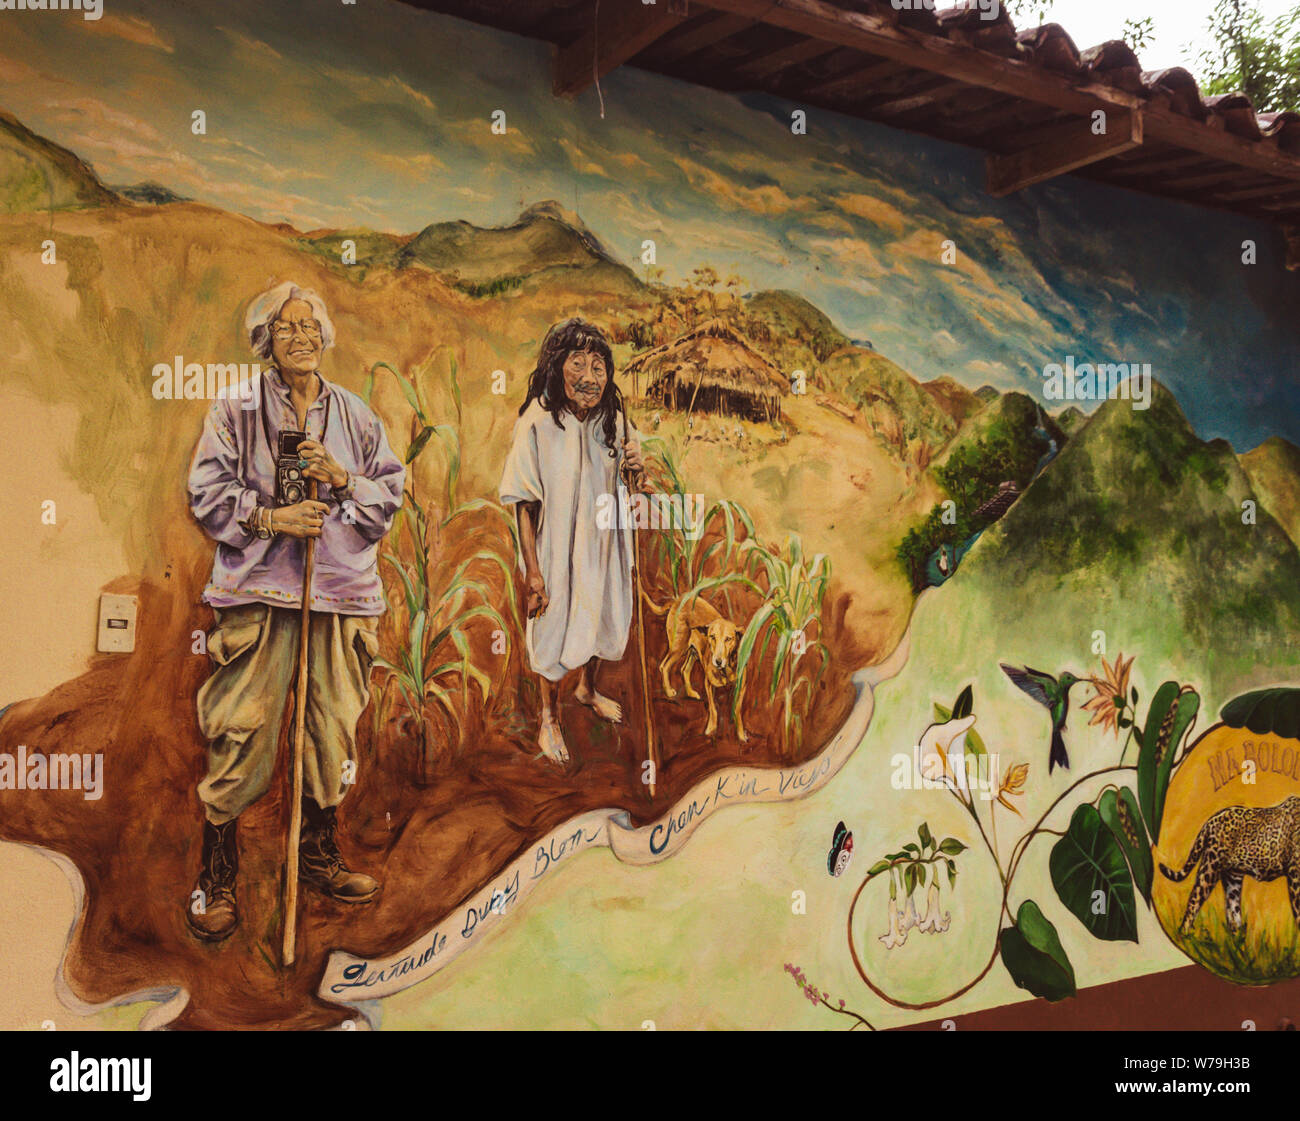 San Cristobal de las Casas, Chiapas / Mexico - 21/07/2019: Detail of mural in Na Bolom cultural site in San Cristobal de las Casas Mexico Stock Photo